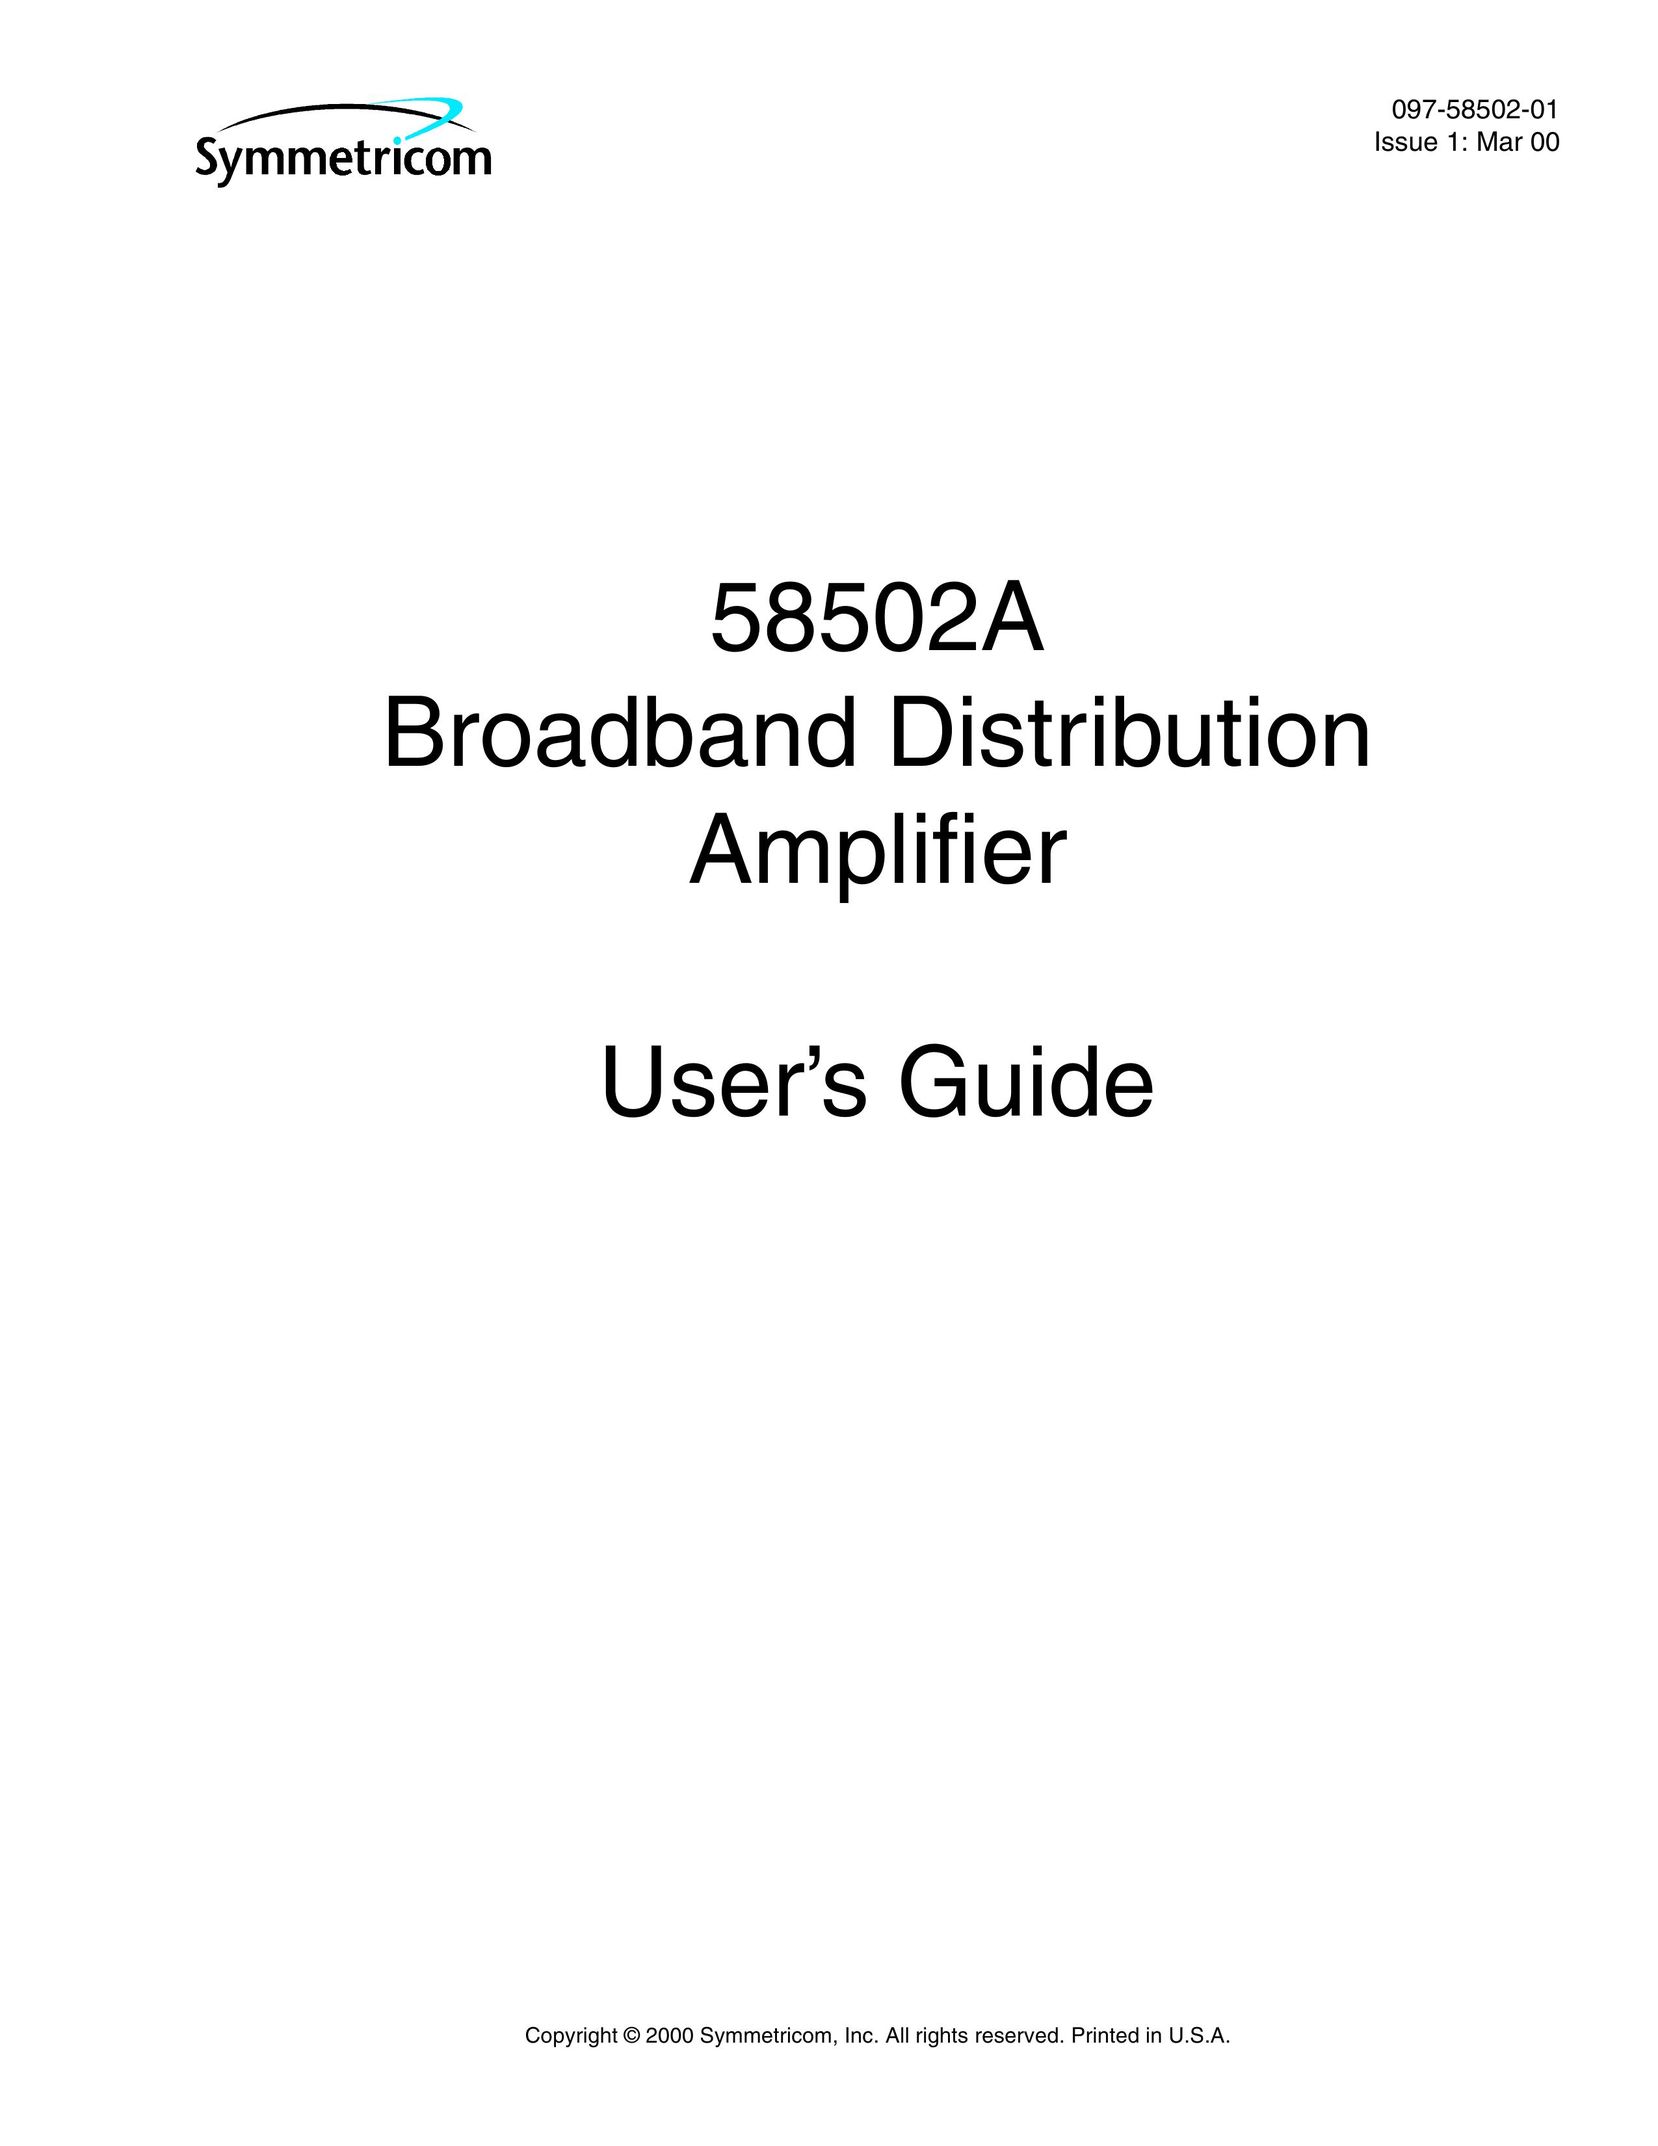 Symmetricom 58502A Network Router User Manual